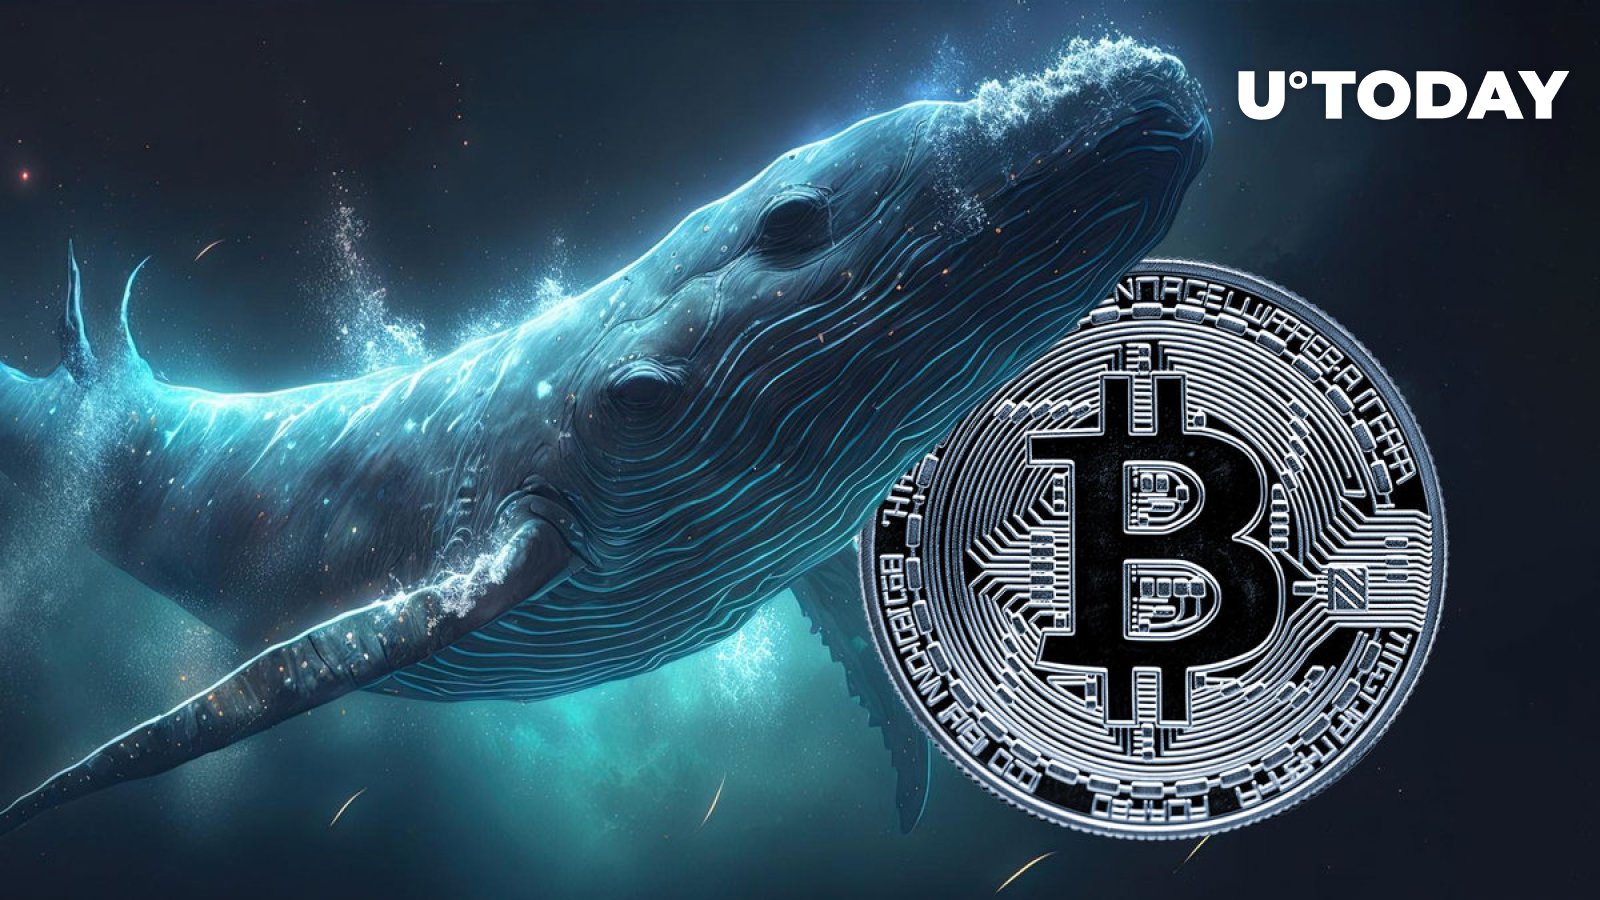 Bitcoin (BTC) Whales Increase Holdings Despite Price Volatility: Details